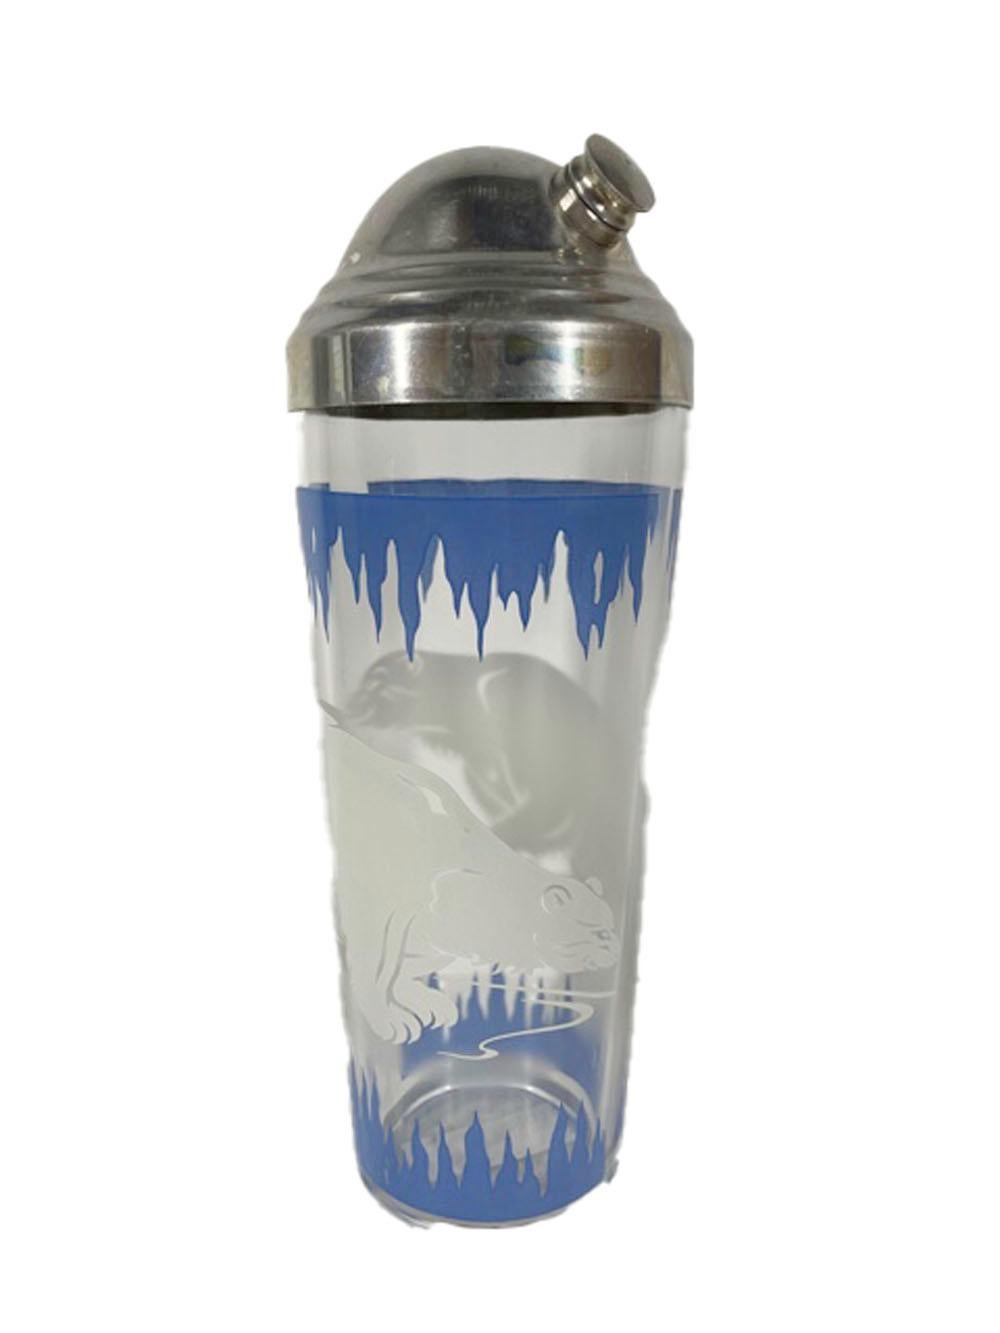 20th Century Art Deco Blue & White Polar Bear Cocktail Shaker Set by Hazel Atlas For Sale